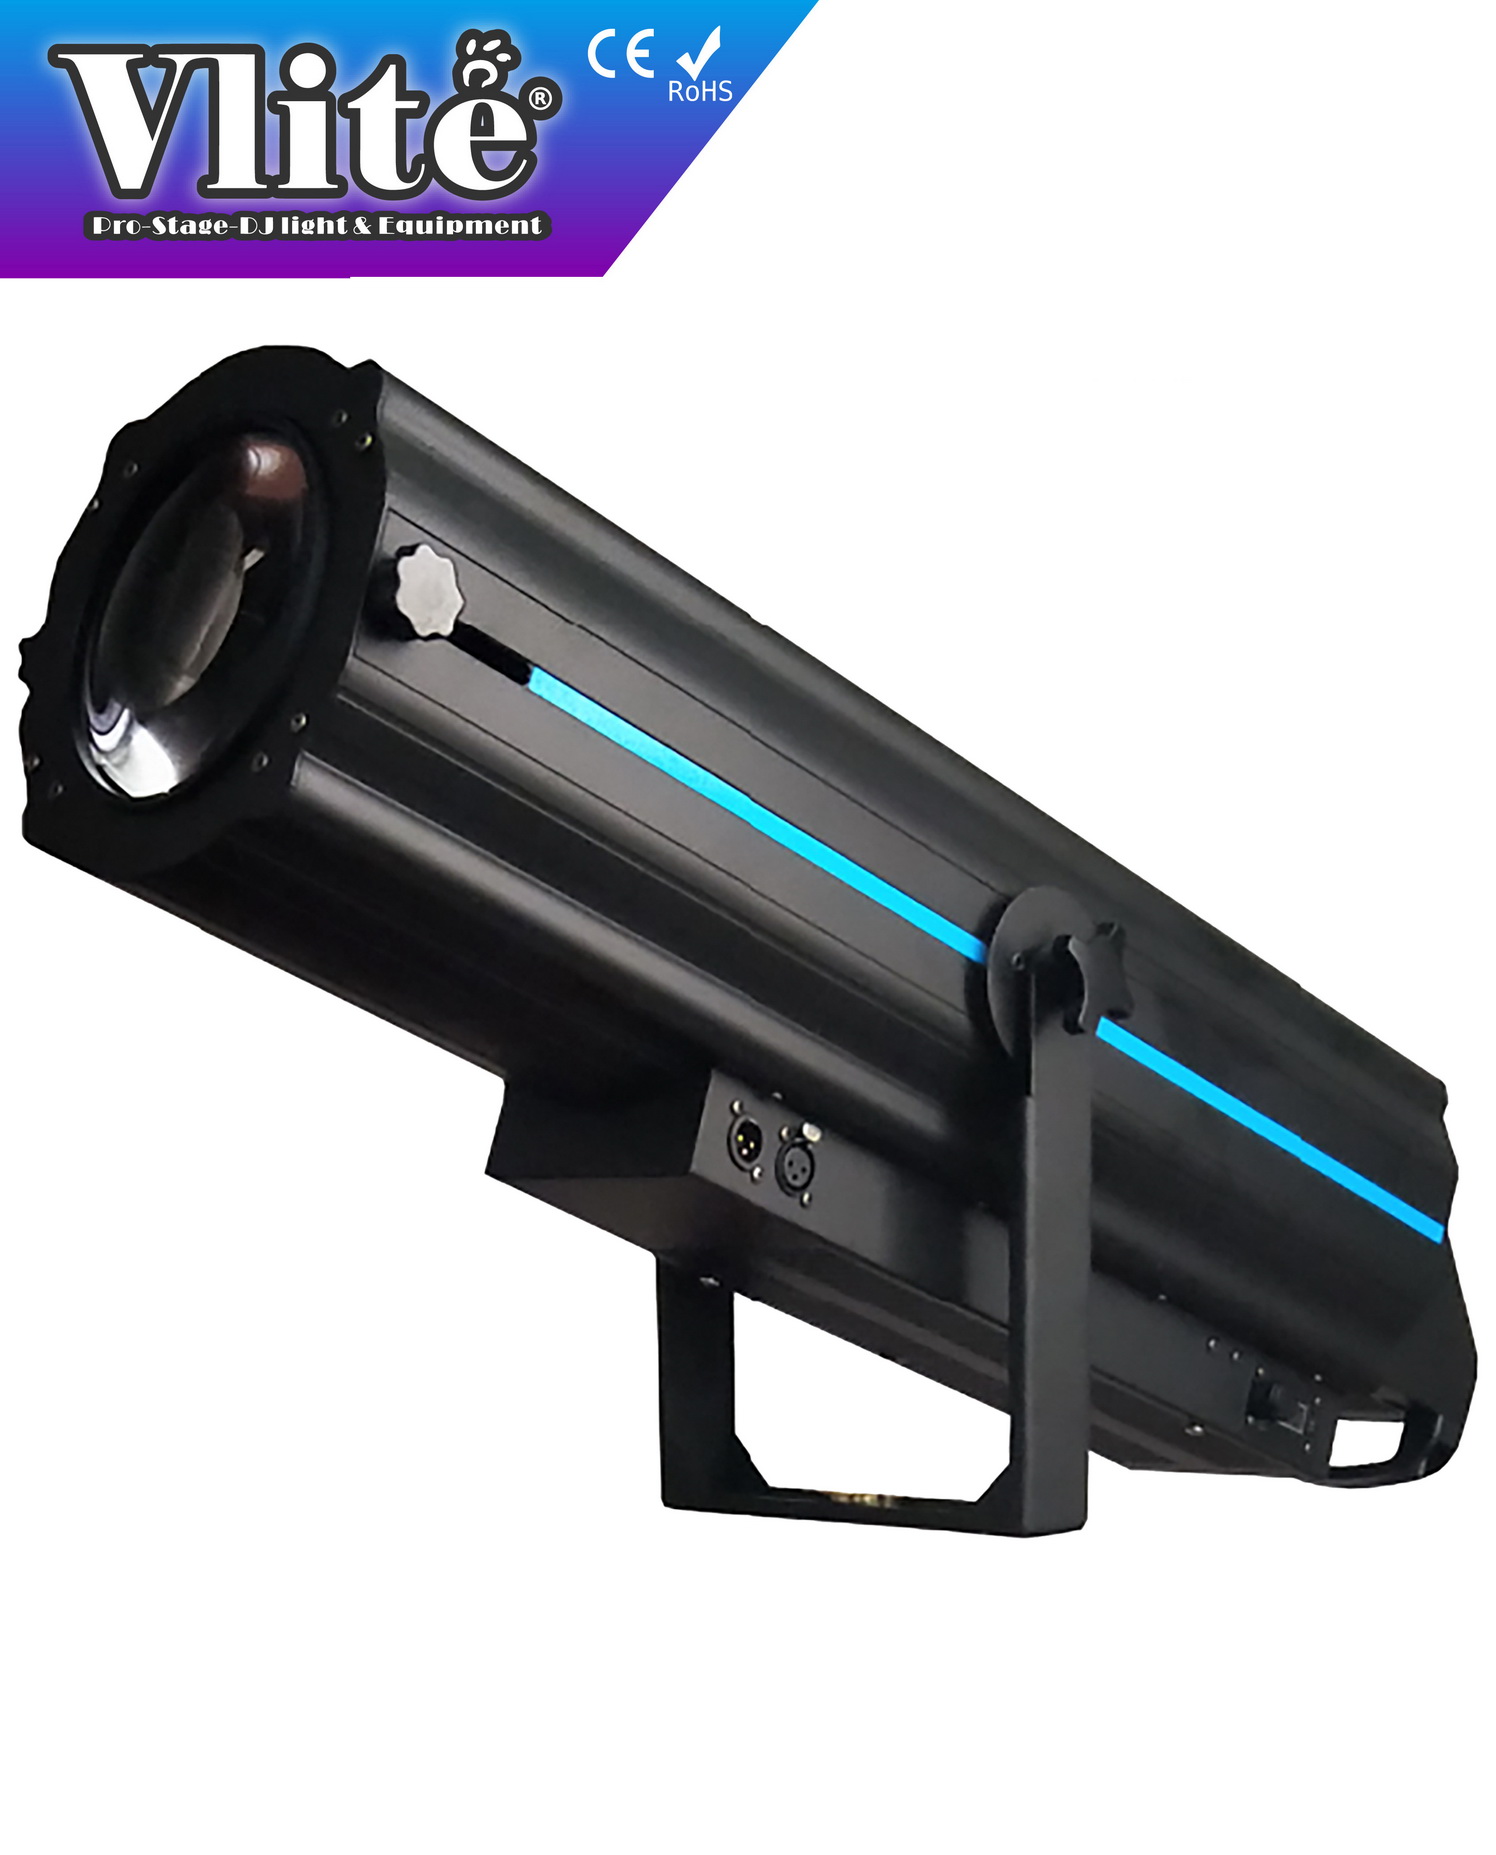 LV-FS600 - LED FOLLOW SPOT 600W